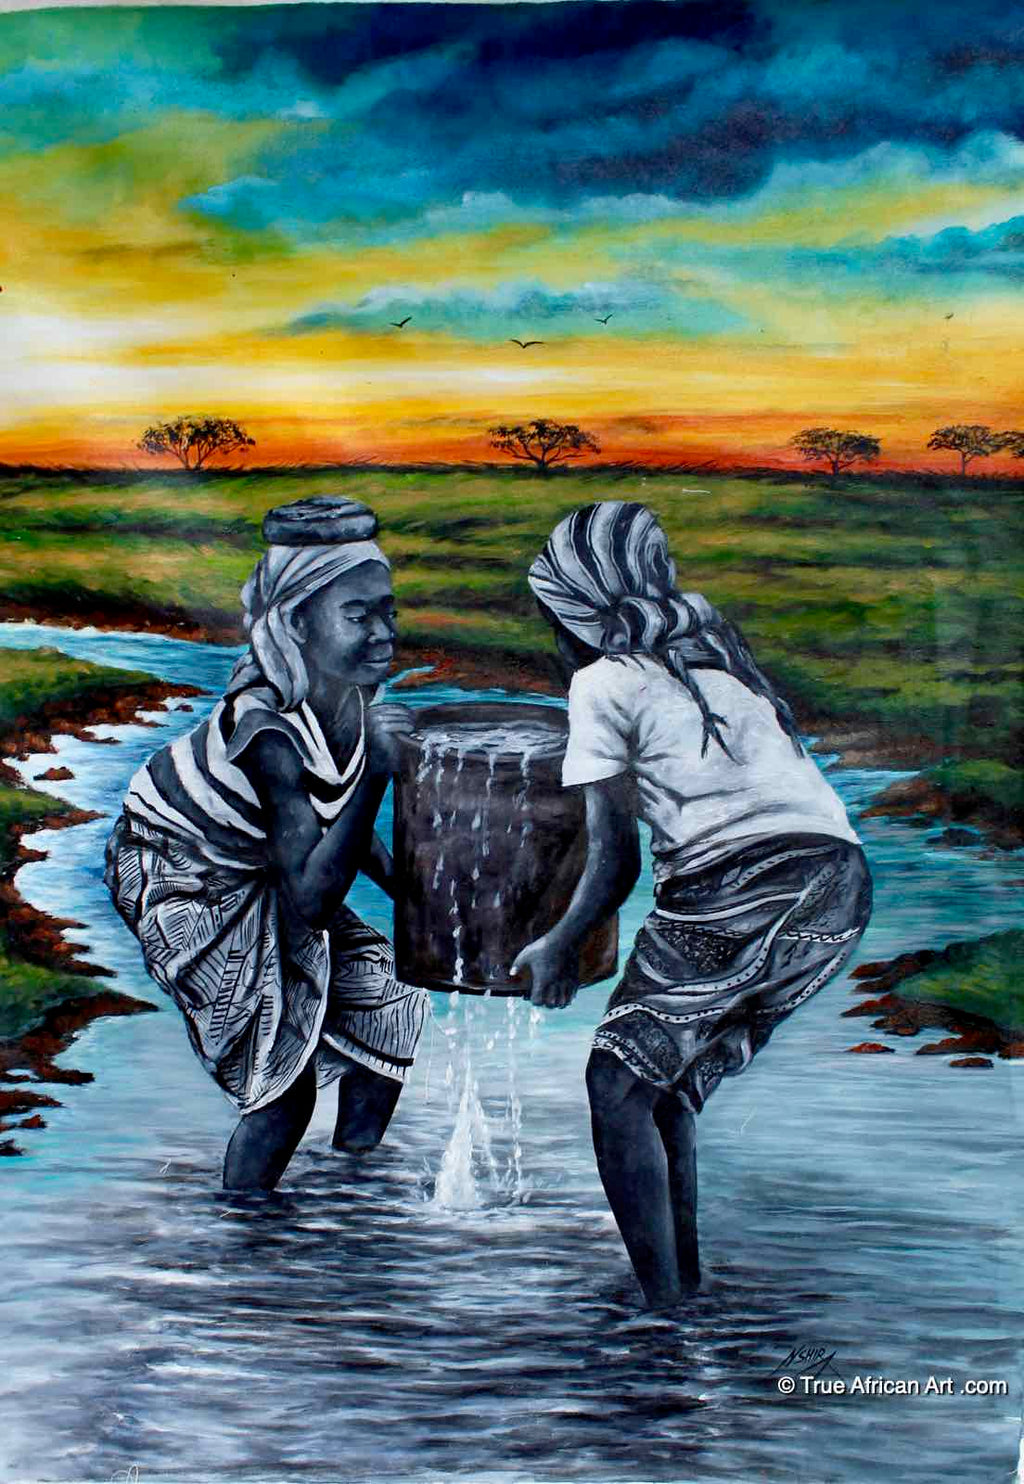 Daniel "Nshira" Akortia  |  Ghana  |  "Somewhere in Africa"  |  Original  |  True African Art .com